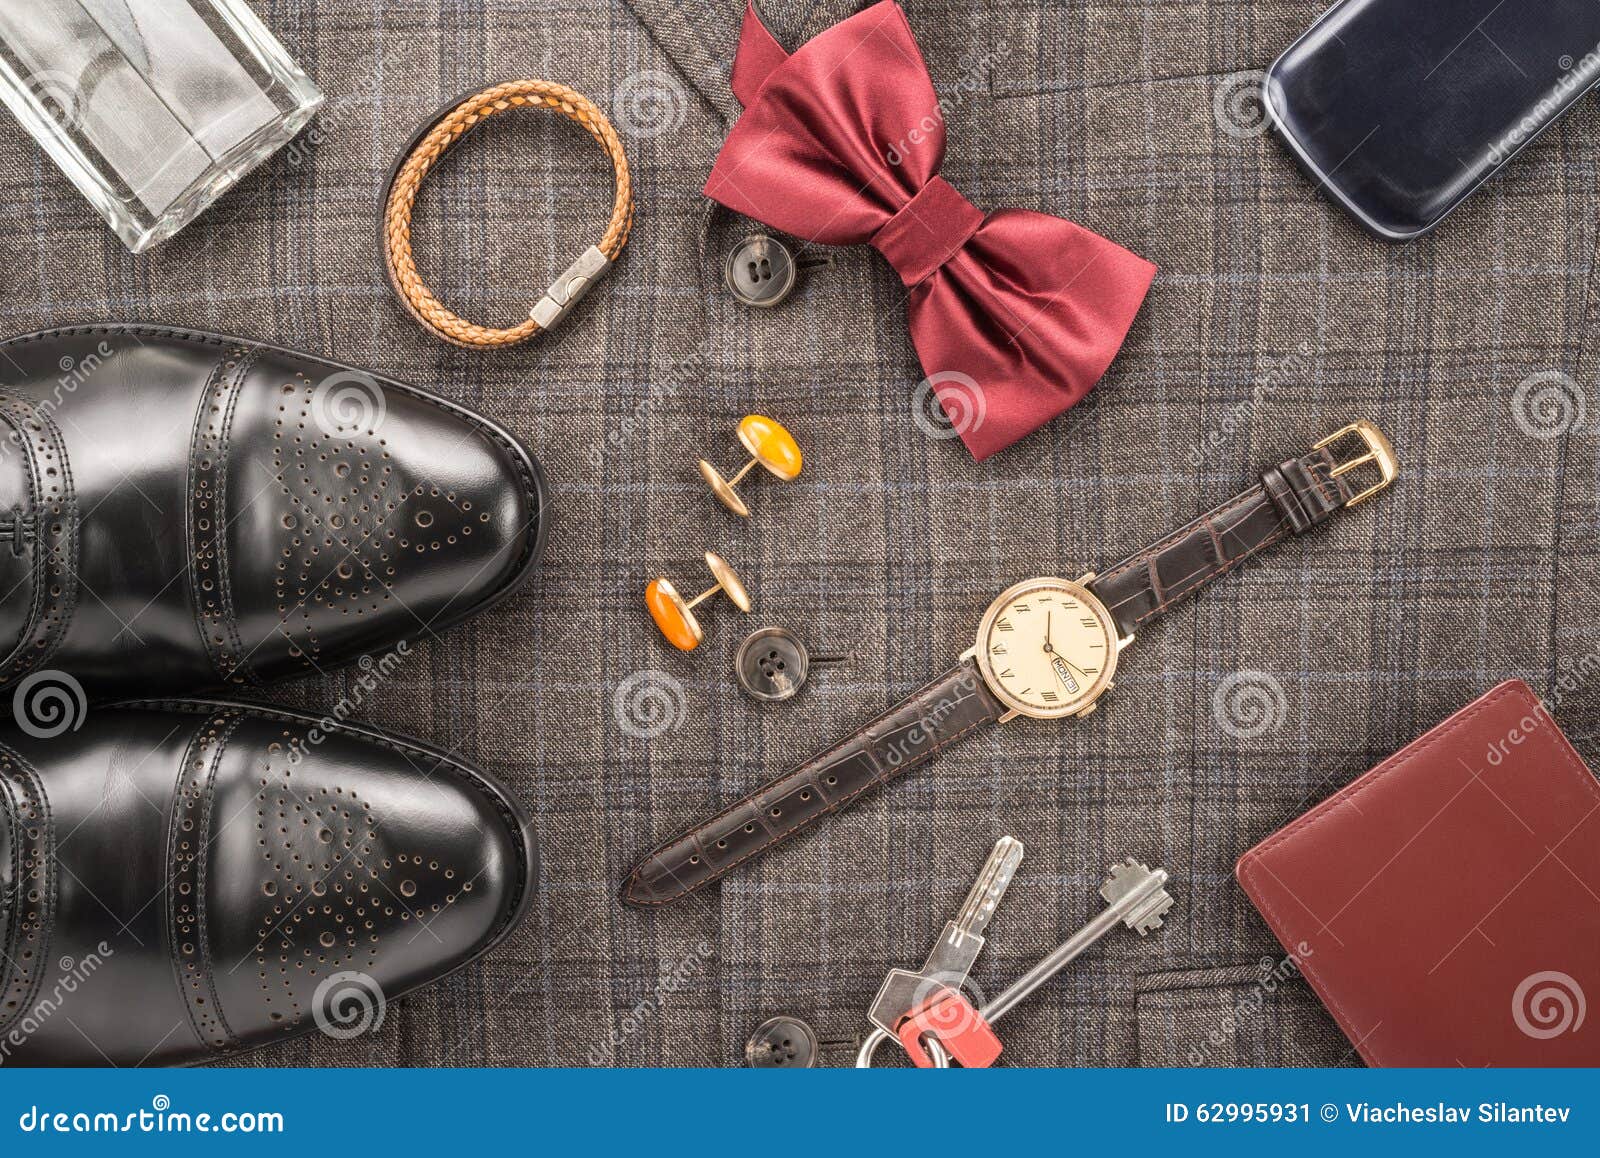 Men accessories stock image. Image of black, cufflinks - 62995931